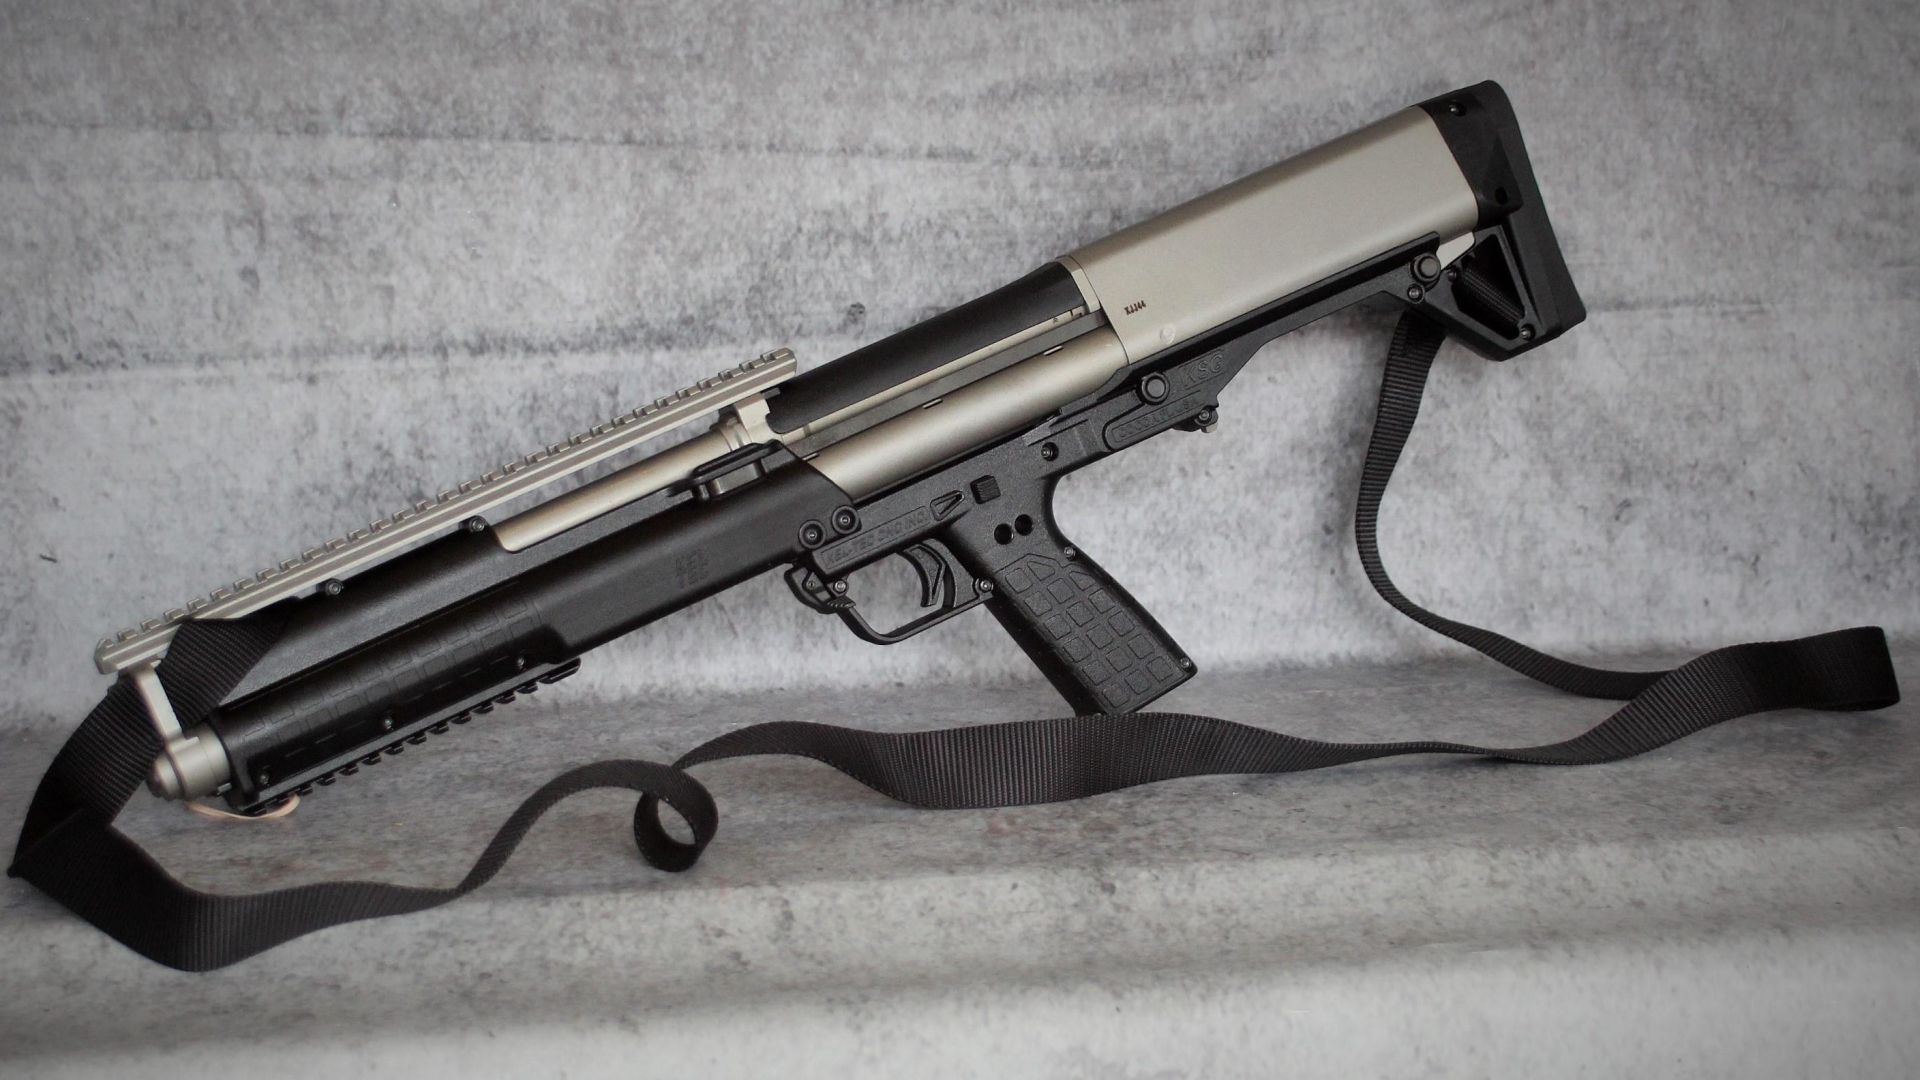 Kel-Tec KSG 10, ружье, дробовик, кастом, Kel-Tec KSG 10, shotgun, custom (horizontal)